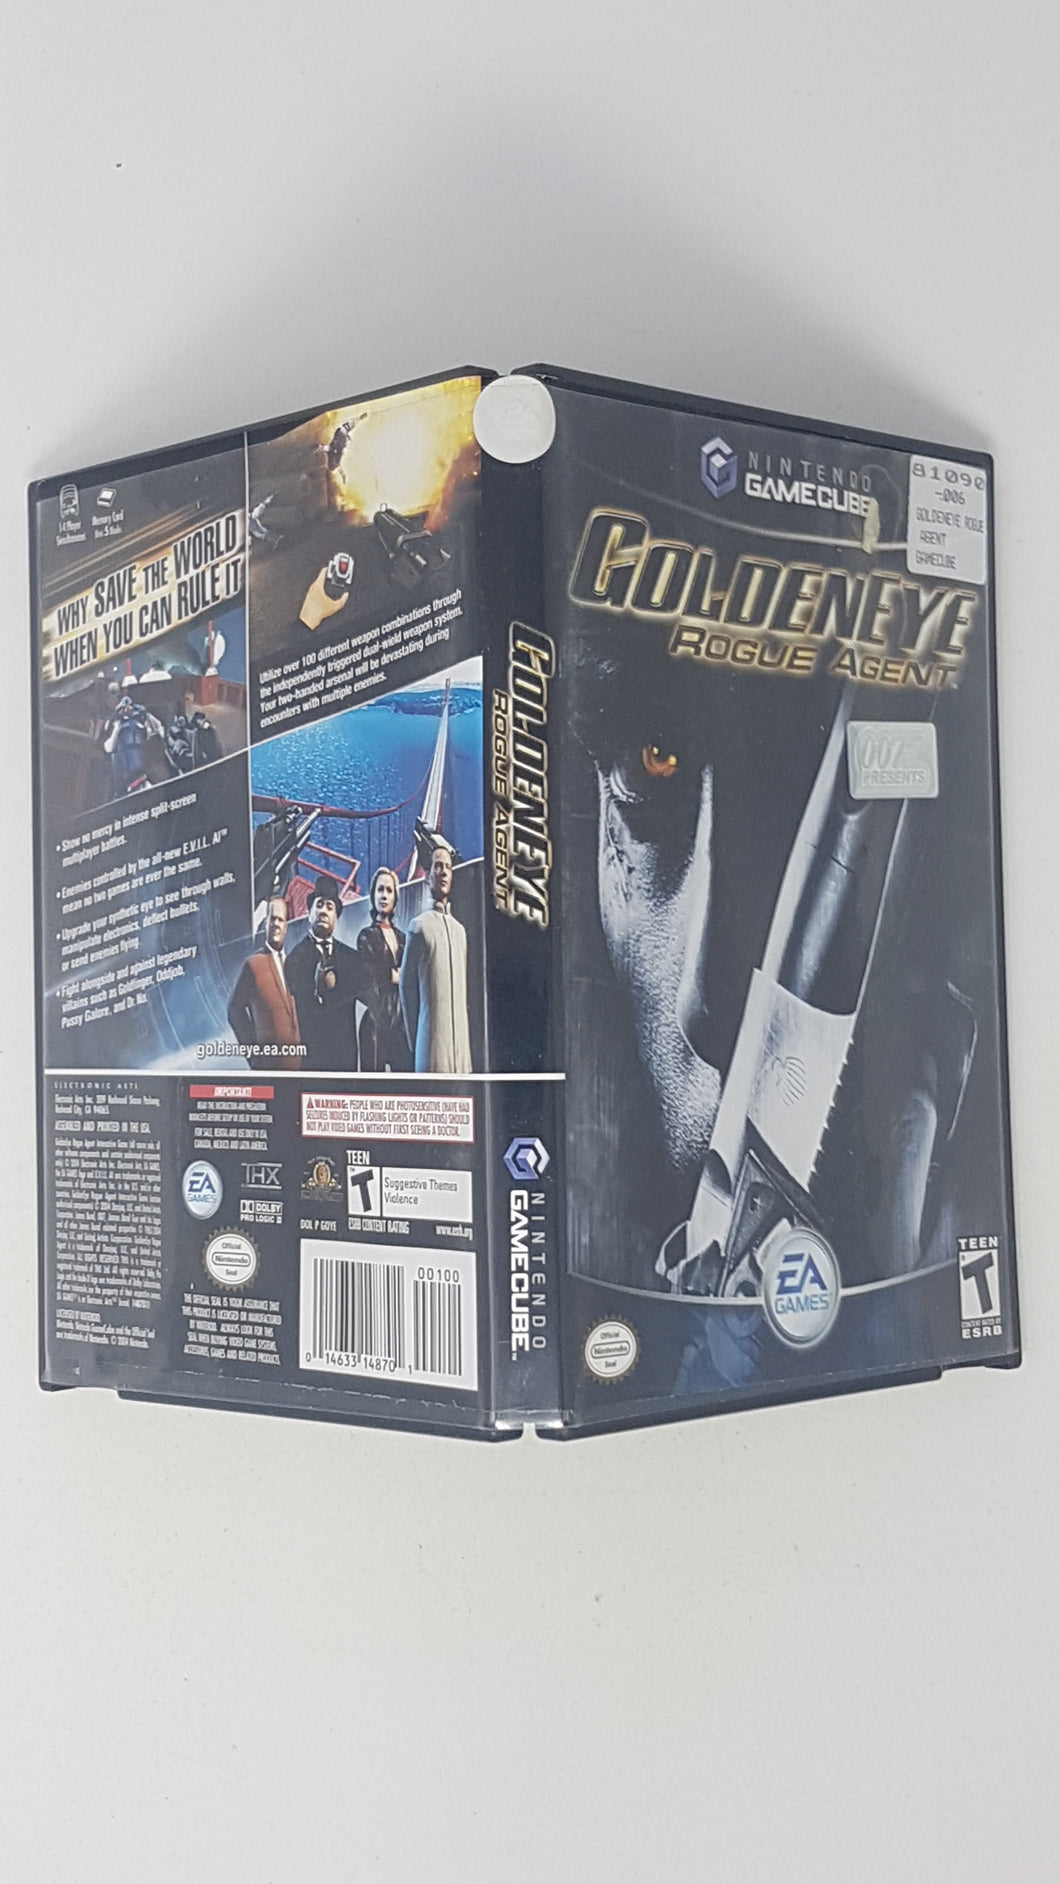 007 GoldenEye Rogue Agent [box] - Nintendo GameCube